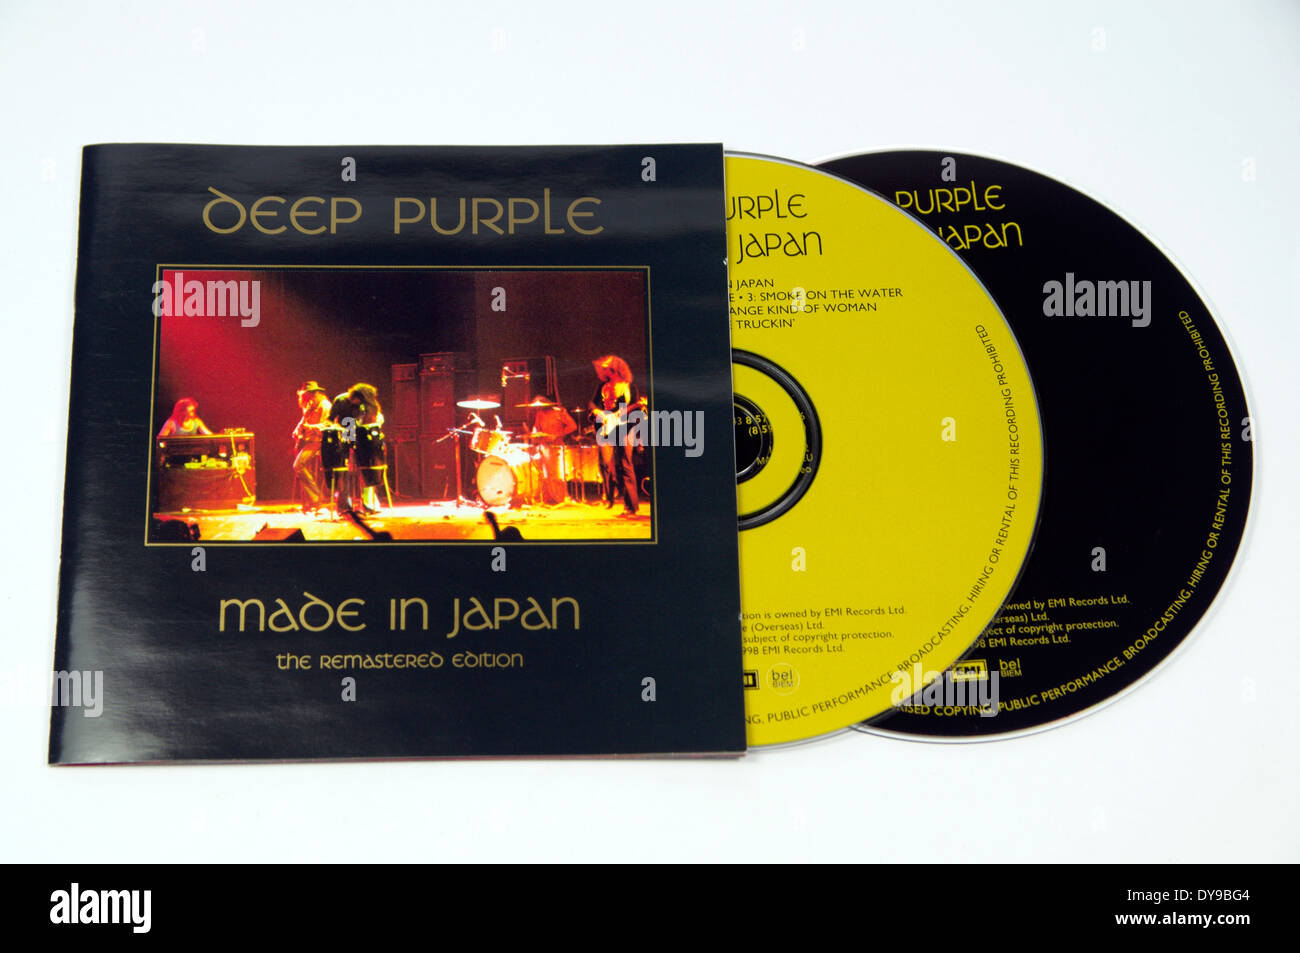 Deep Purple "Made in Japan" Album Stockfoto